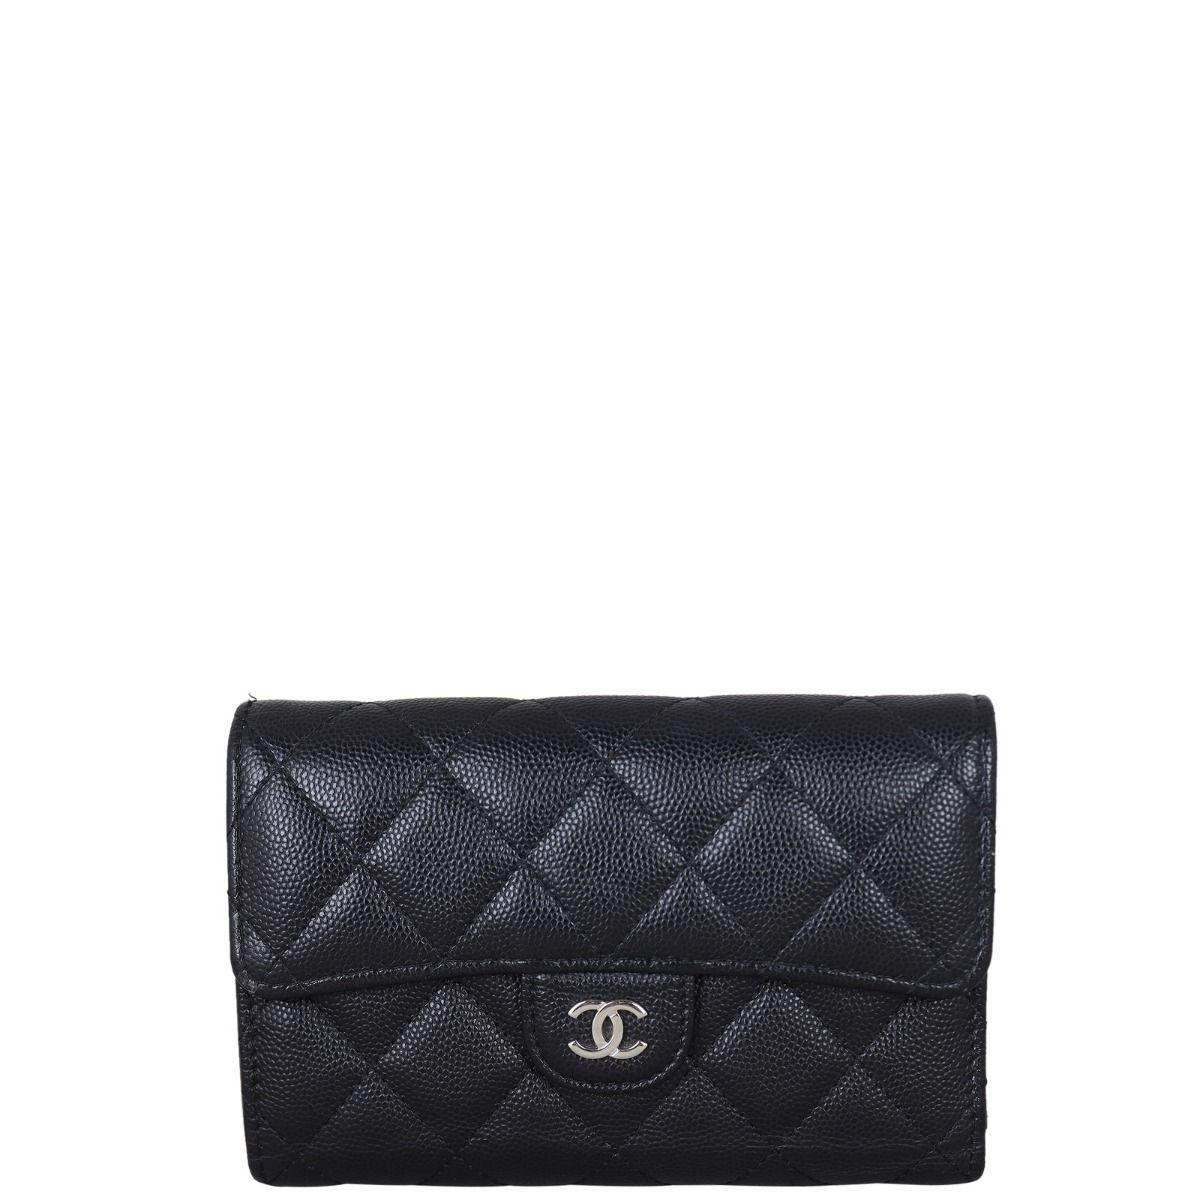 Ví Chanel Classic Flap Wallet màu đen caviar shw best quality